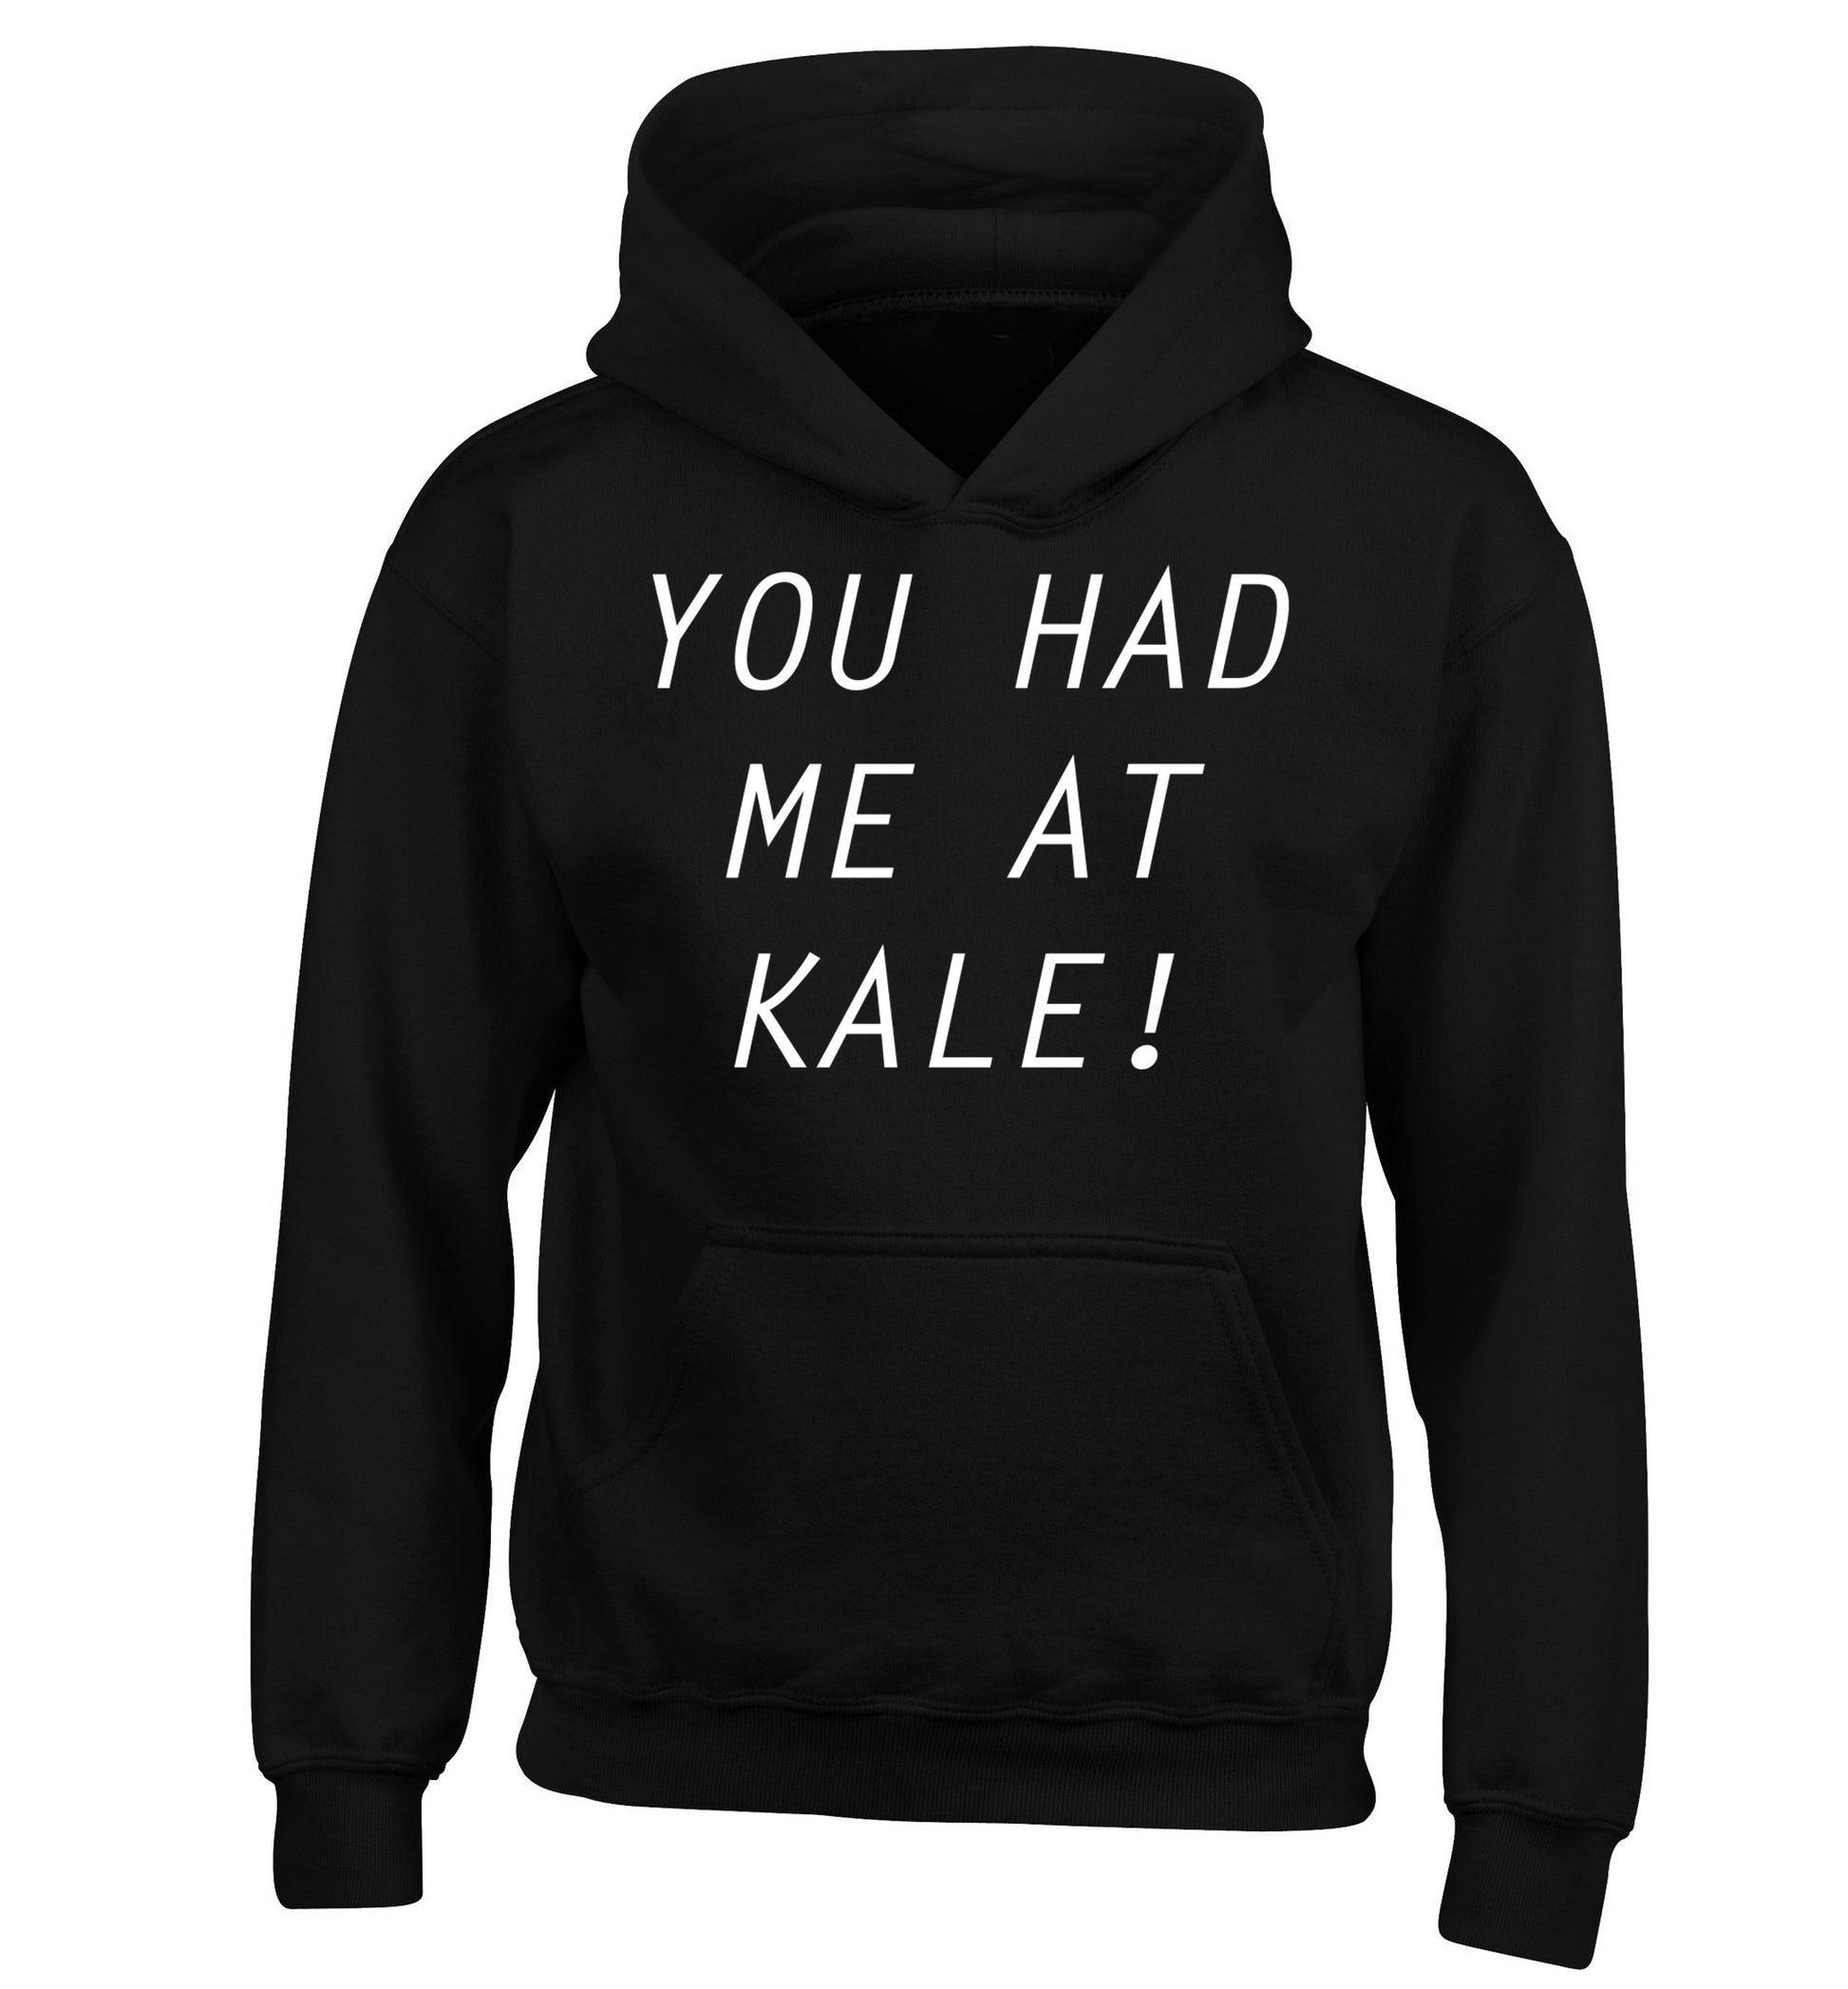 You had me at kale children's black hoodie 12-14 Years